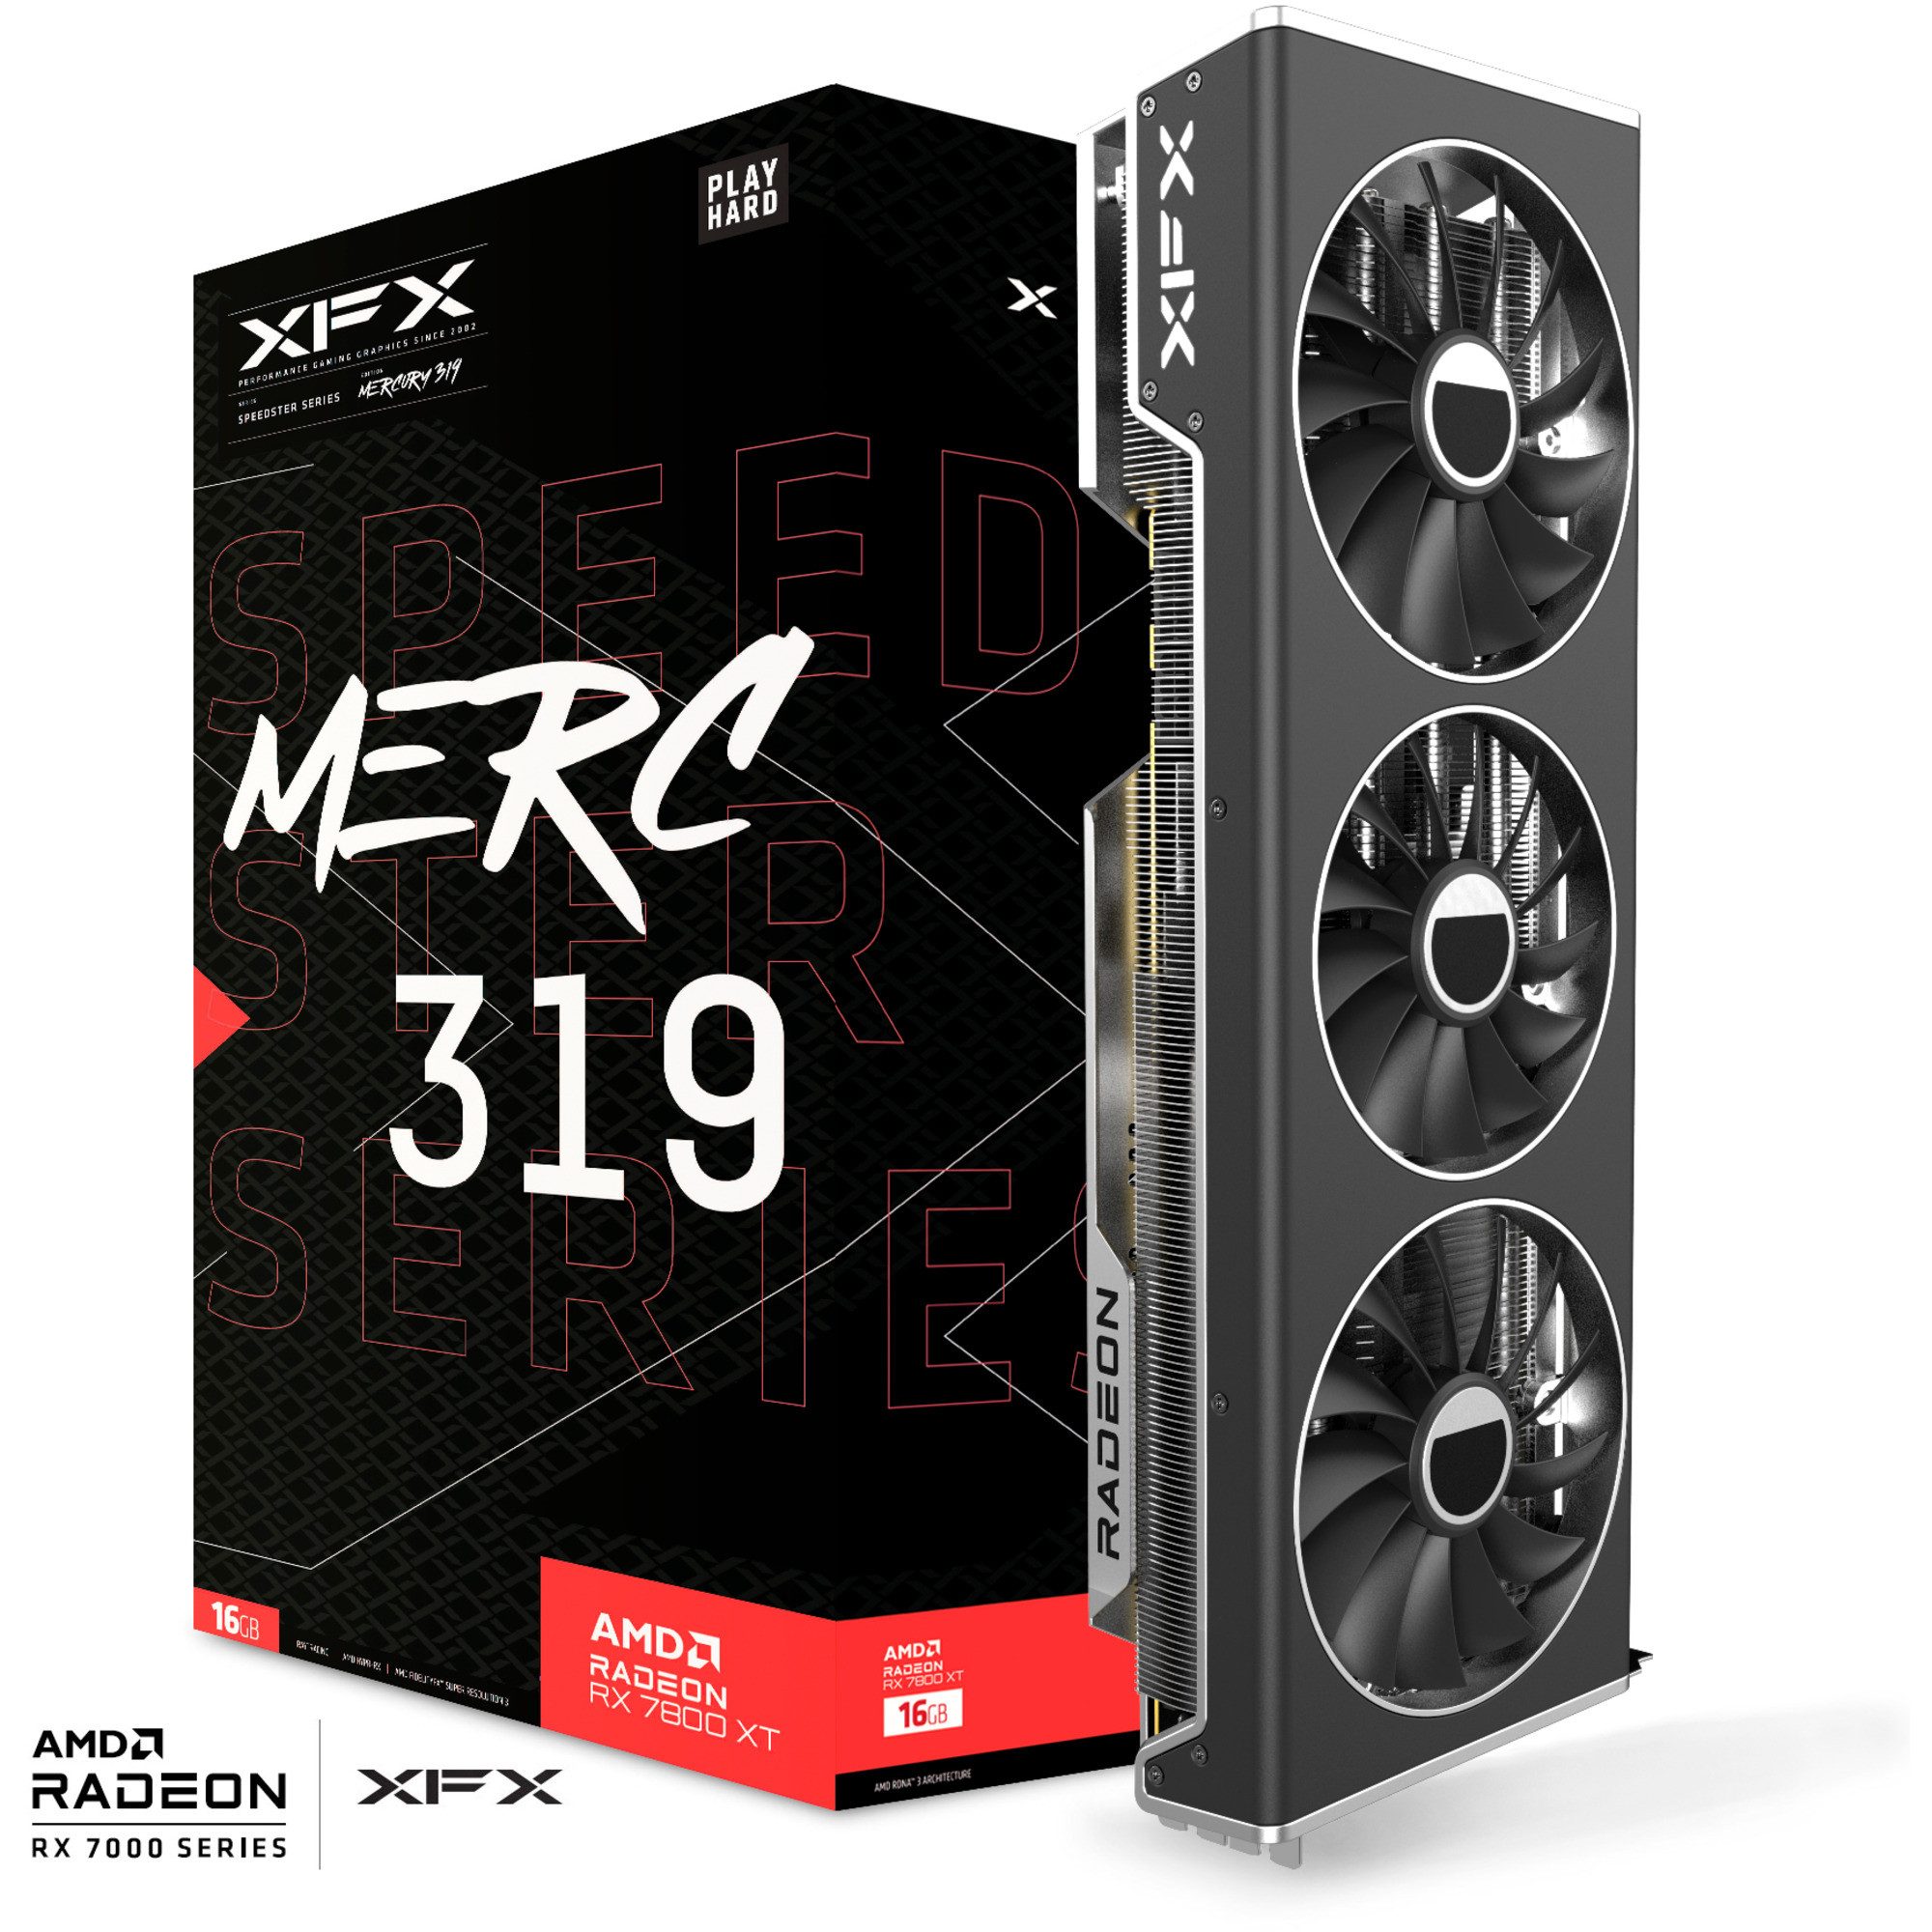 XFX Radeon RX 7800 XT SPEEDSTER MERC319 BLACK Gaming Grafikkarte (16 GB)